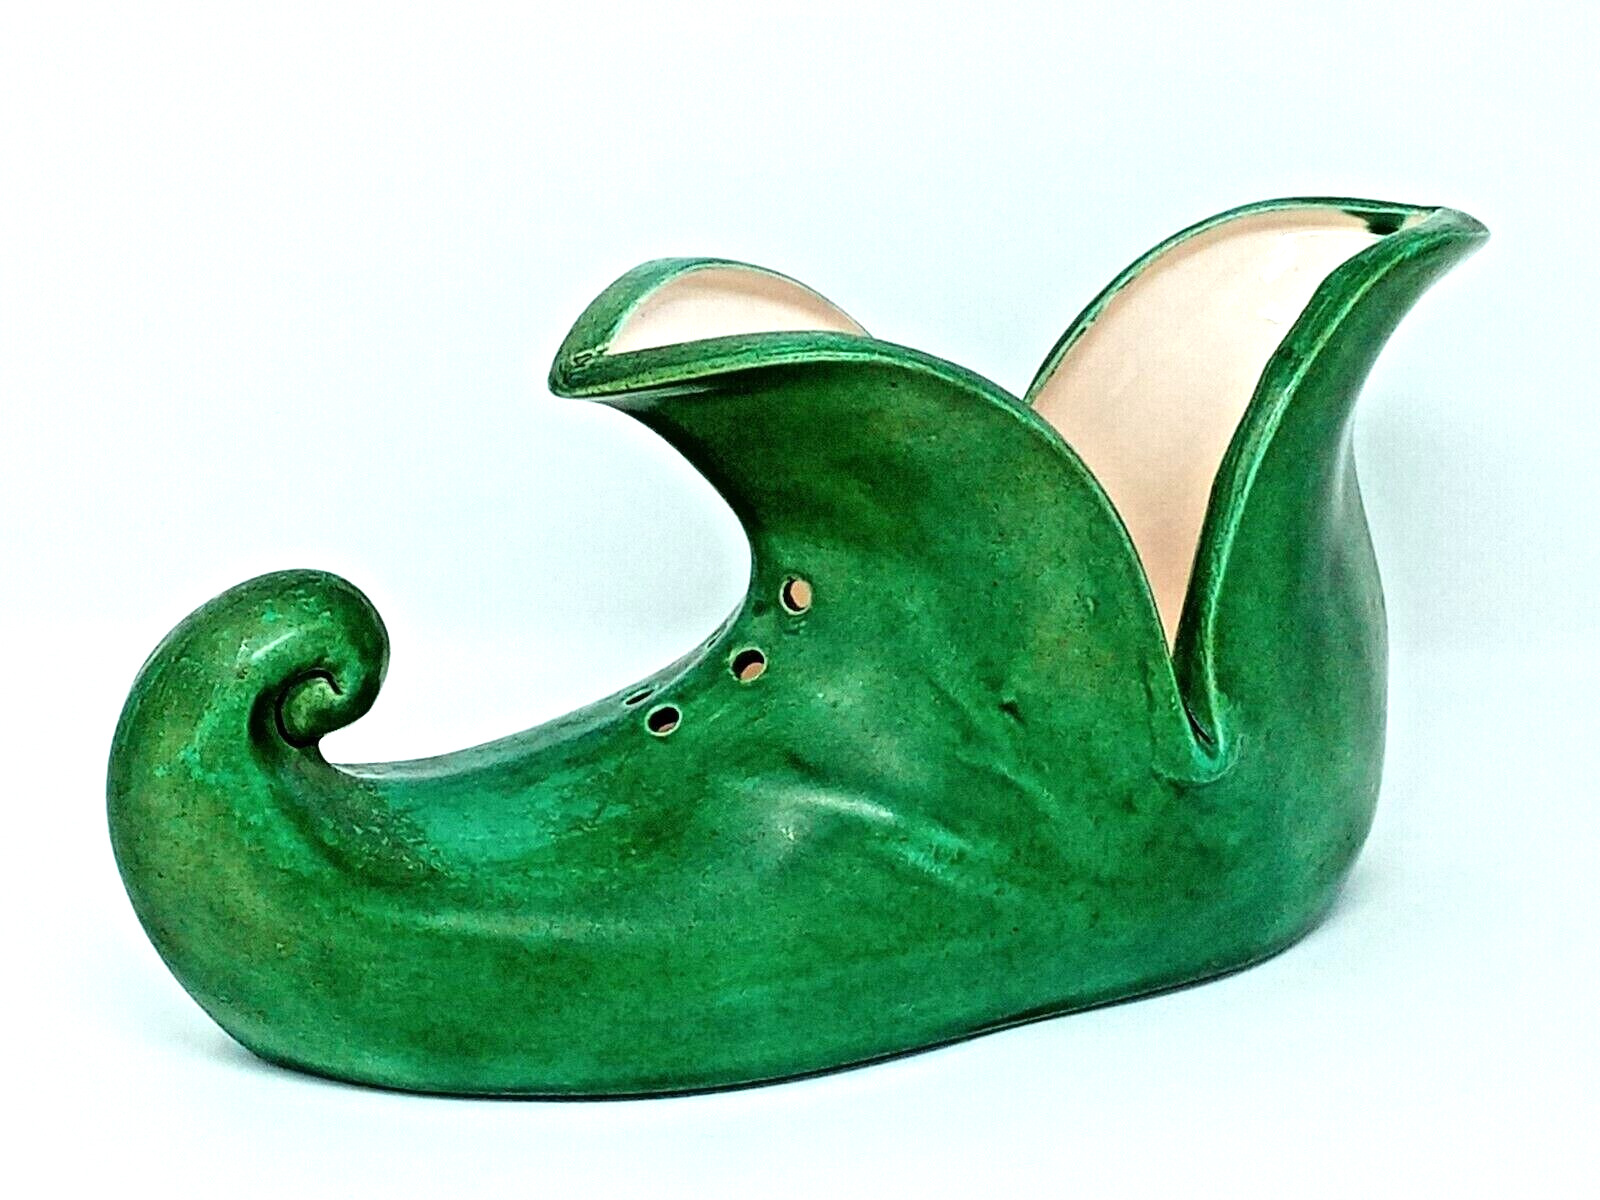 Elf Shoe Ceramic Planter green hobbyist R Presolone mold Christmas Santa vgc